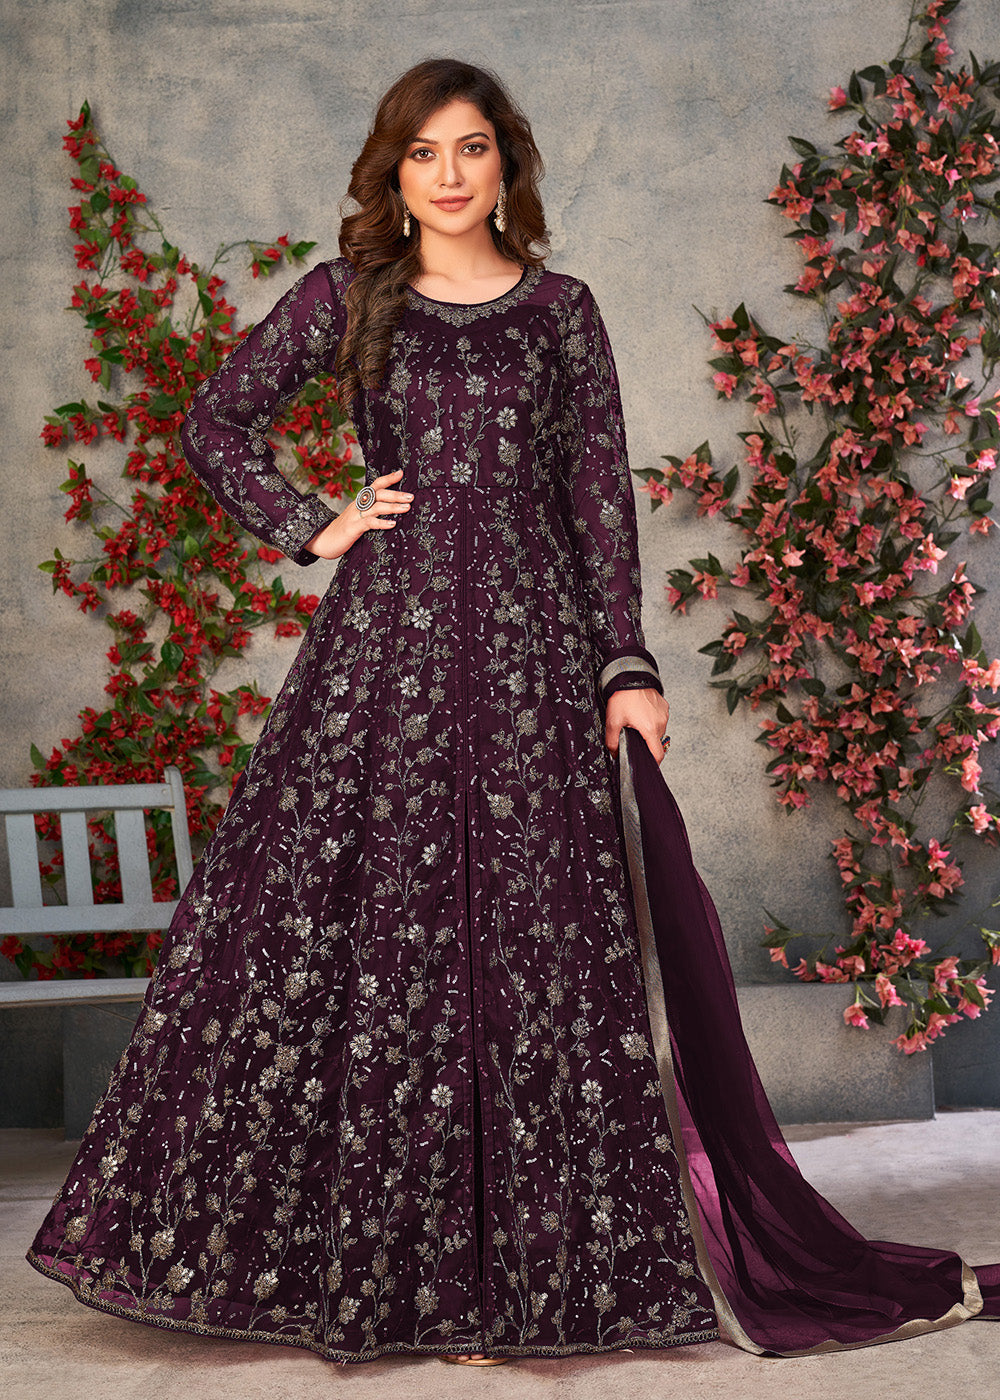 Buy Now Vintage Purple Wedding Function Pant Style Anarkali Suit Online in USA, UK, Australia, New Zealand, Canada & Worldwide at Empress Clothing.